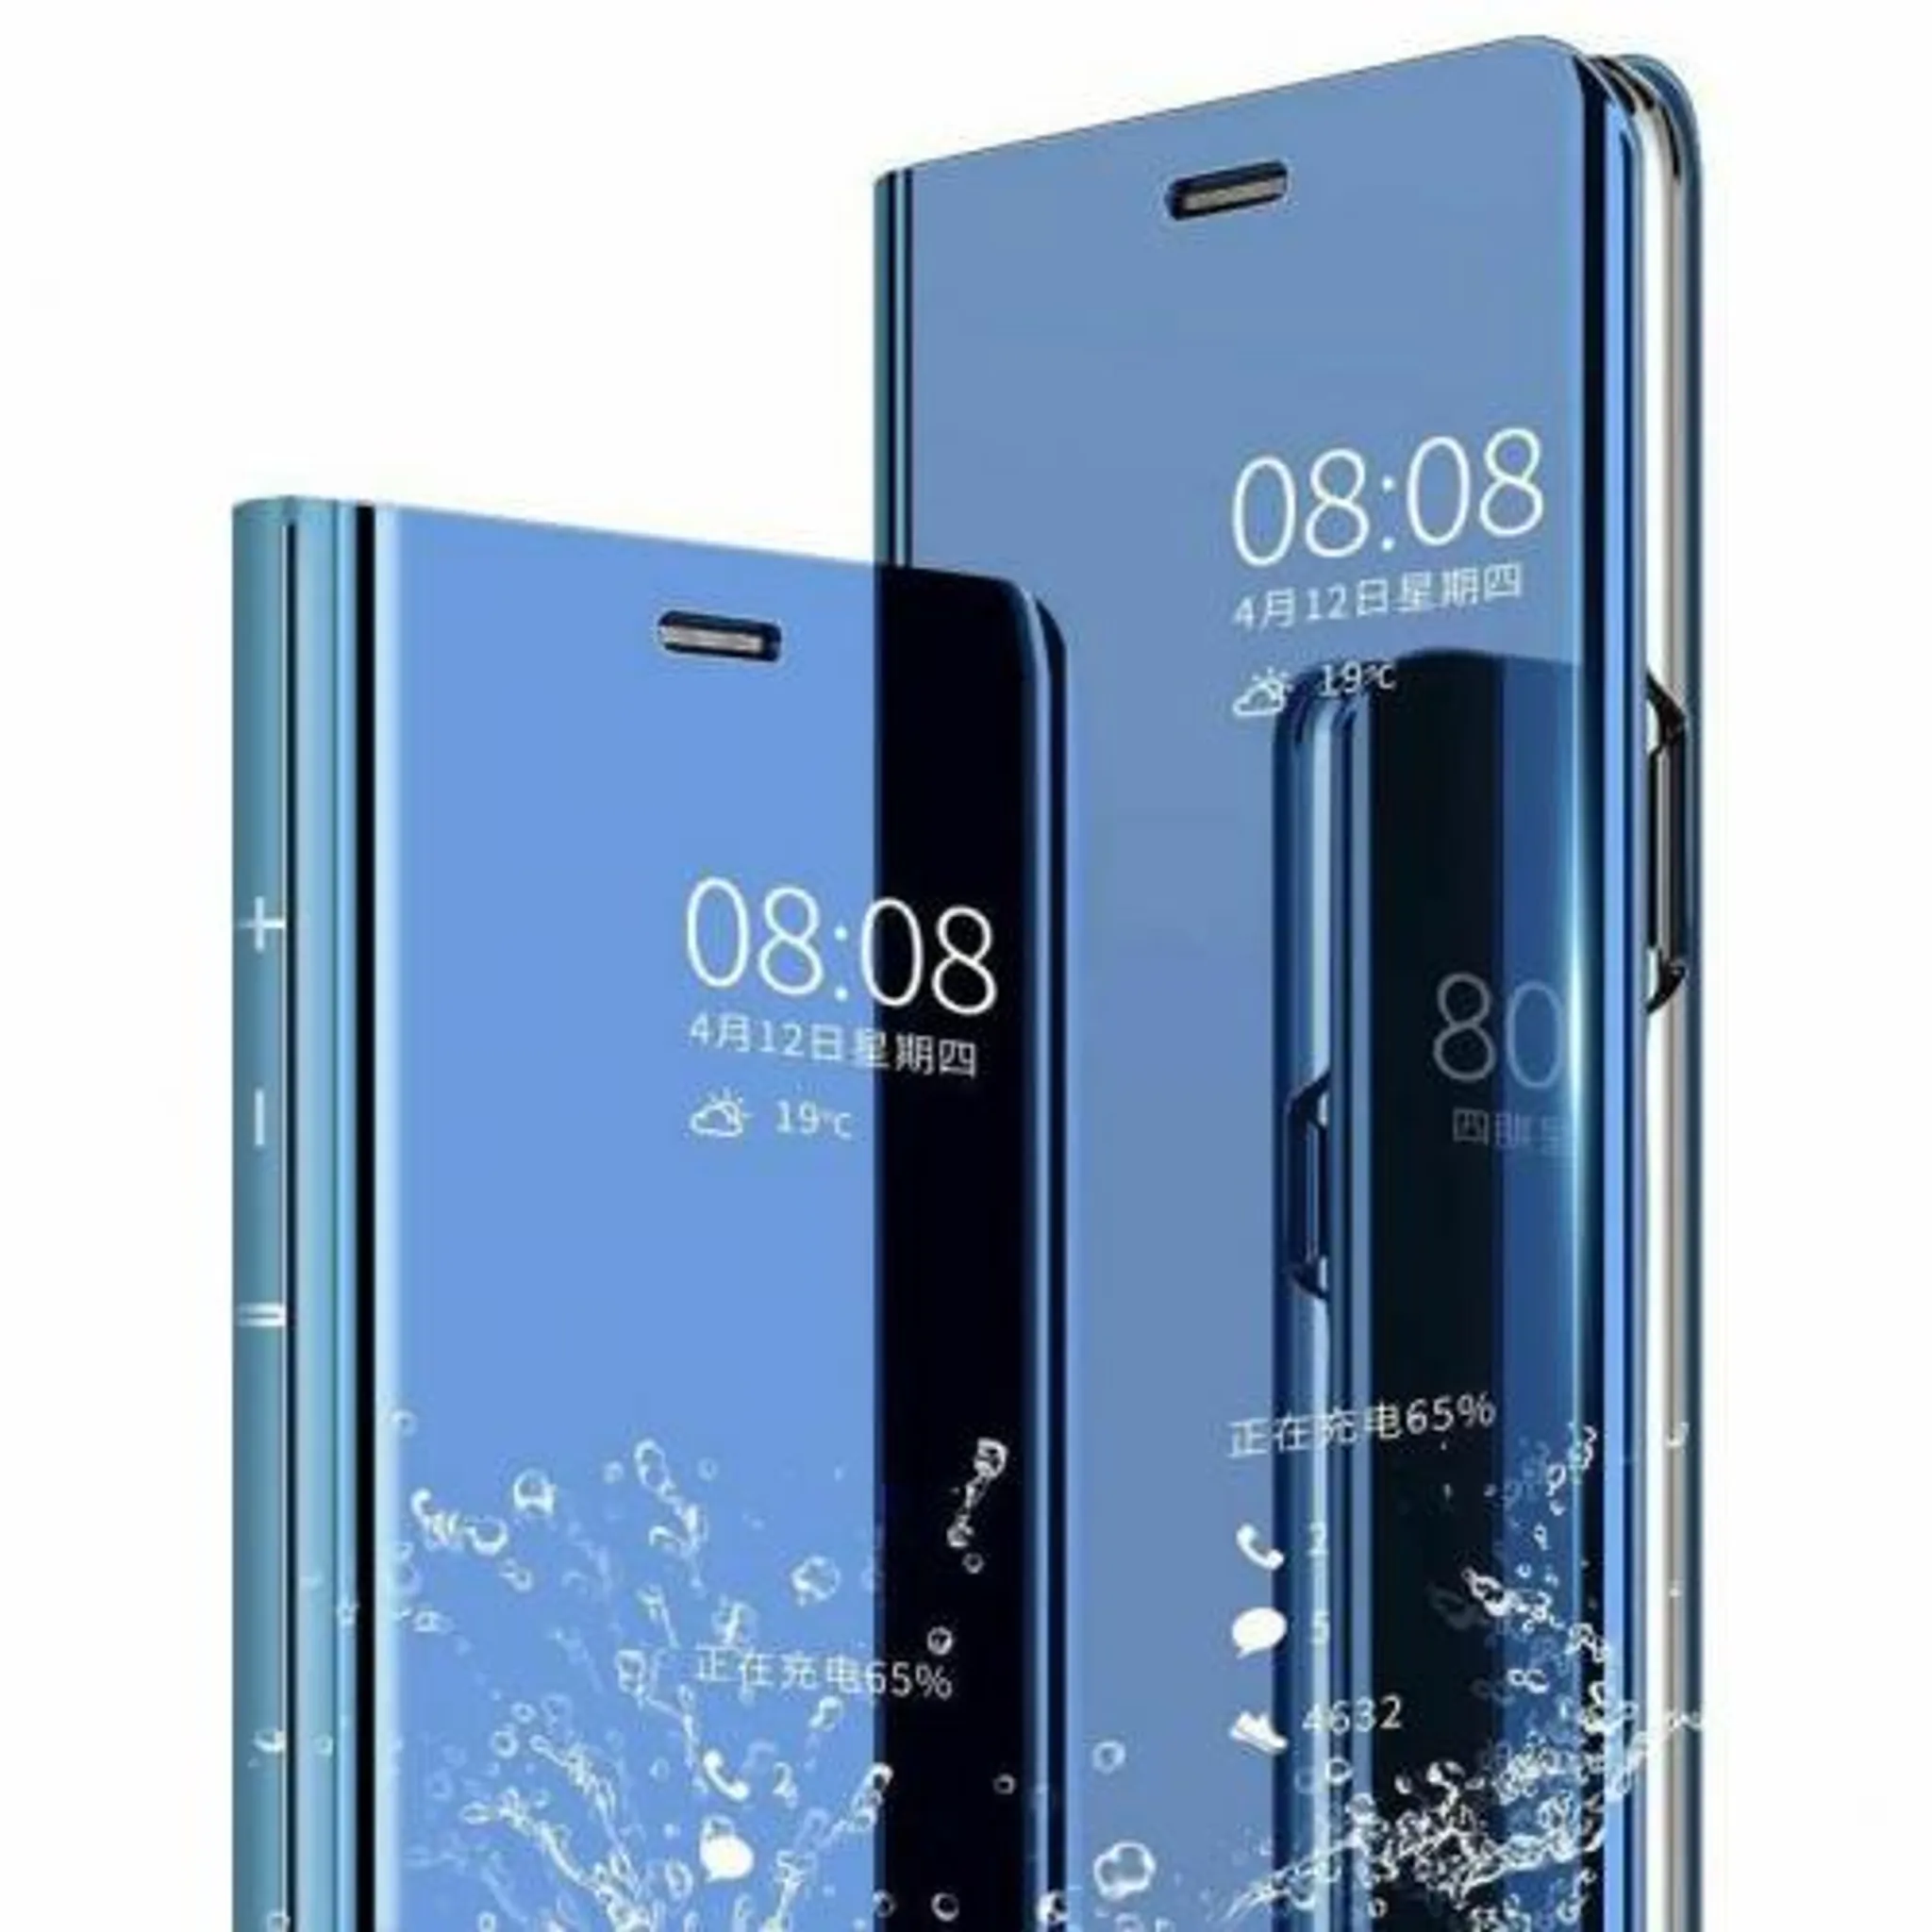 Magnet Case für Samsung Galaxy A52 / A52s 5G / A52 5G Hülle Schutzhülle  Handy Cover Slim Klapphülle